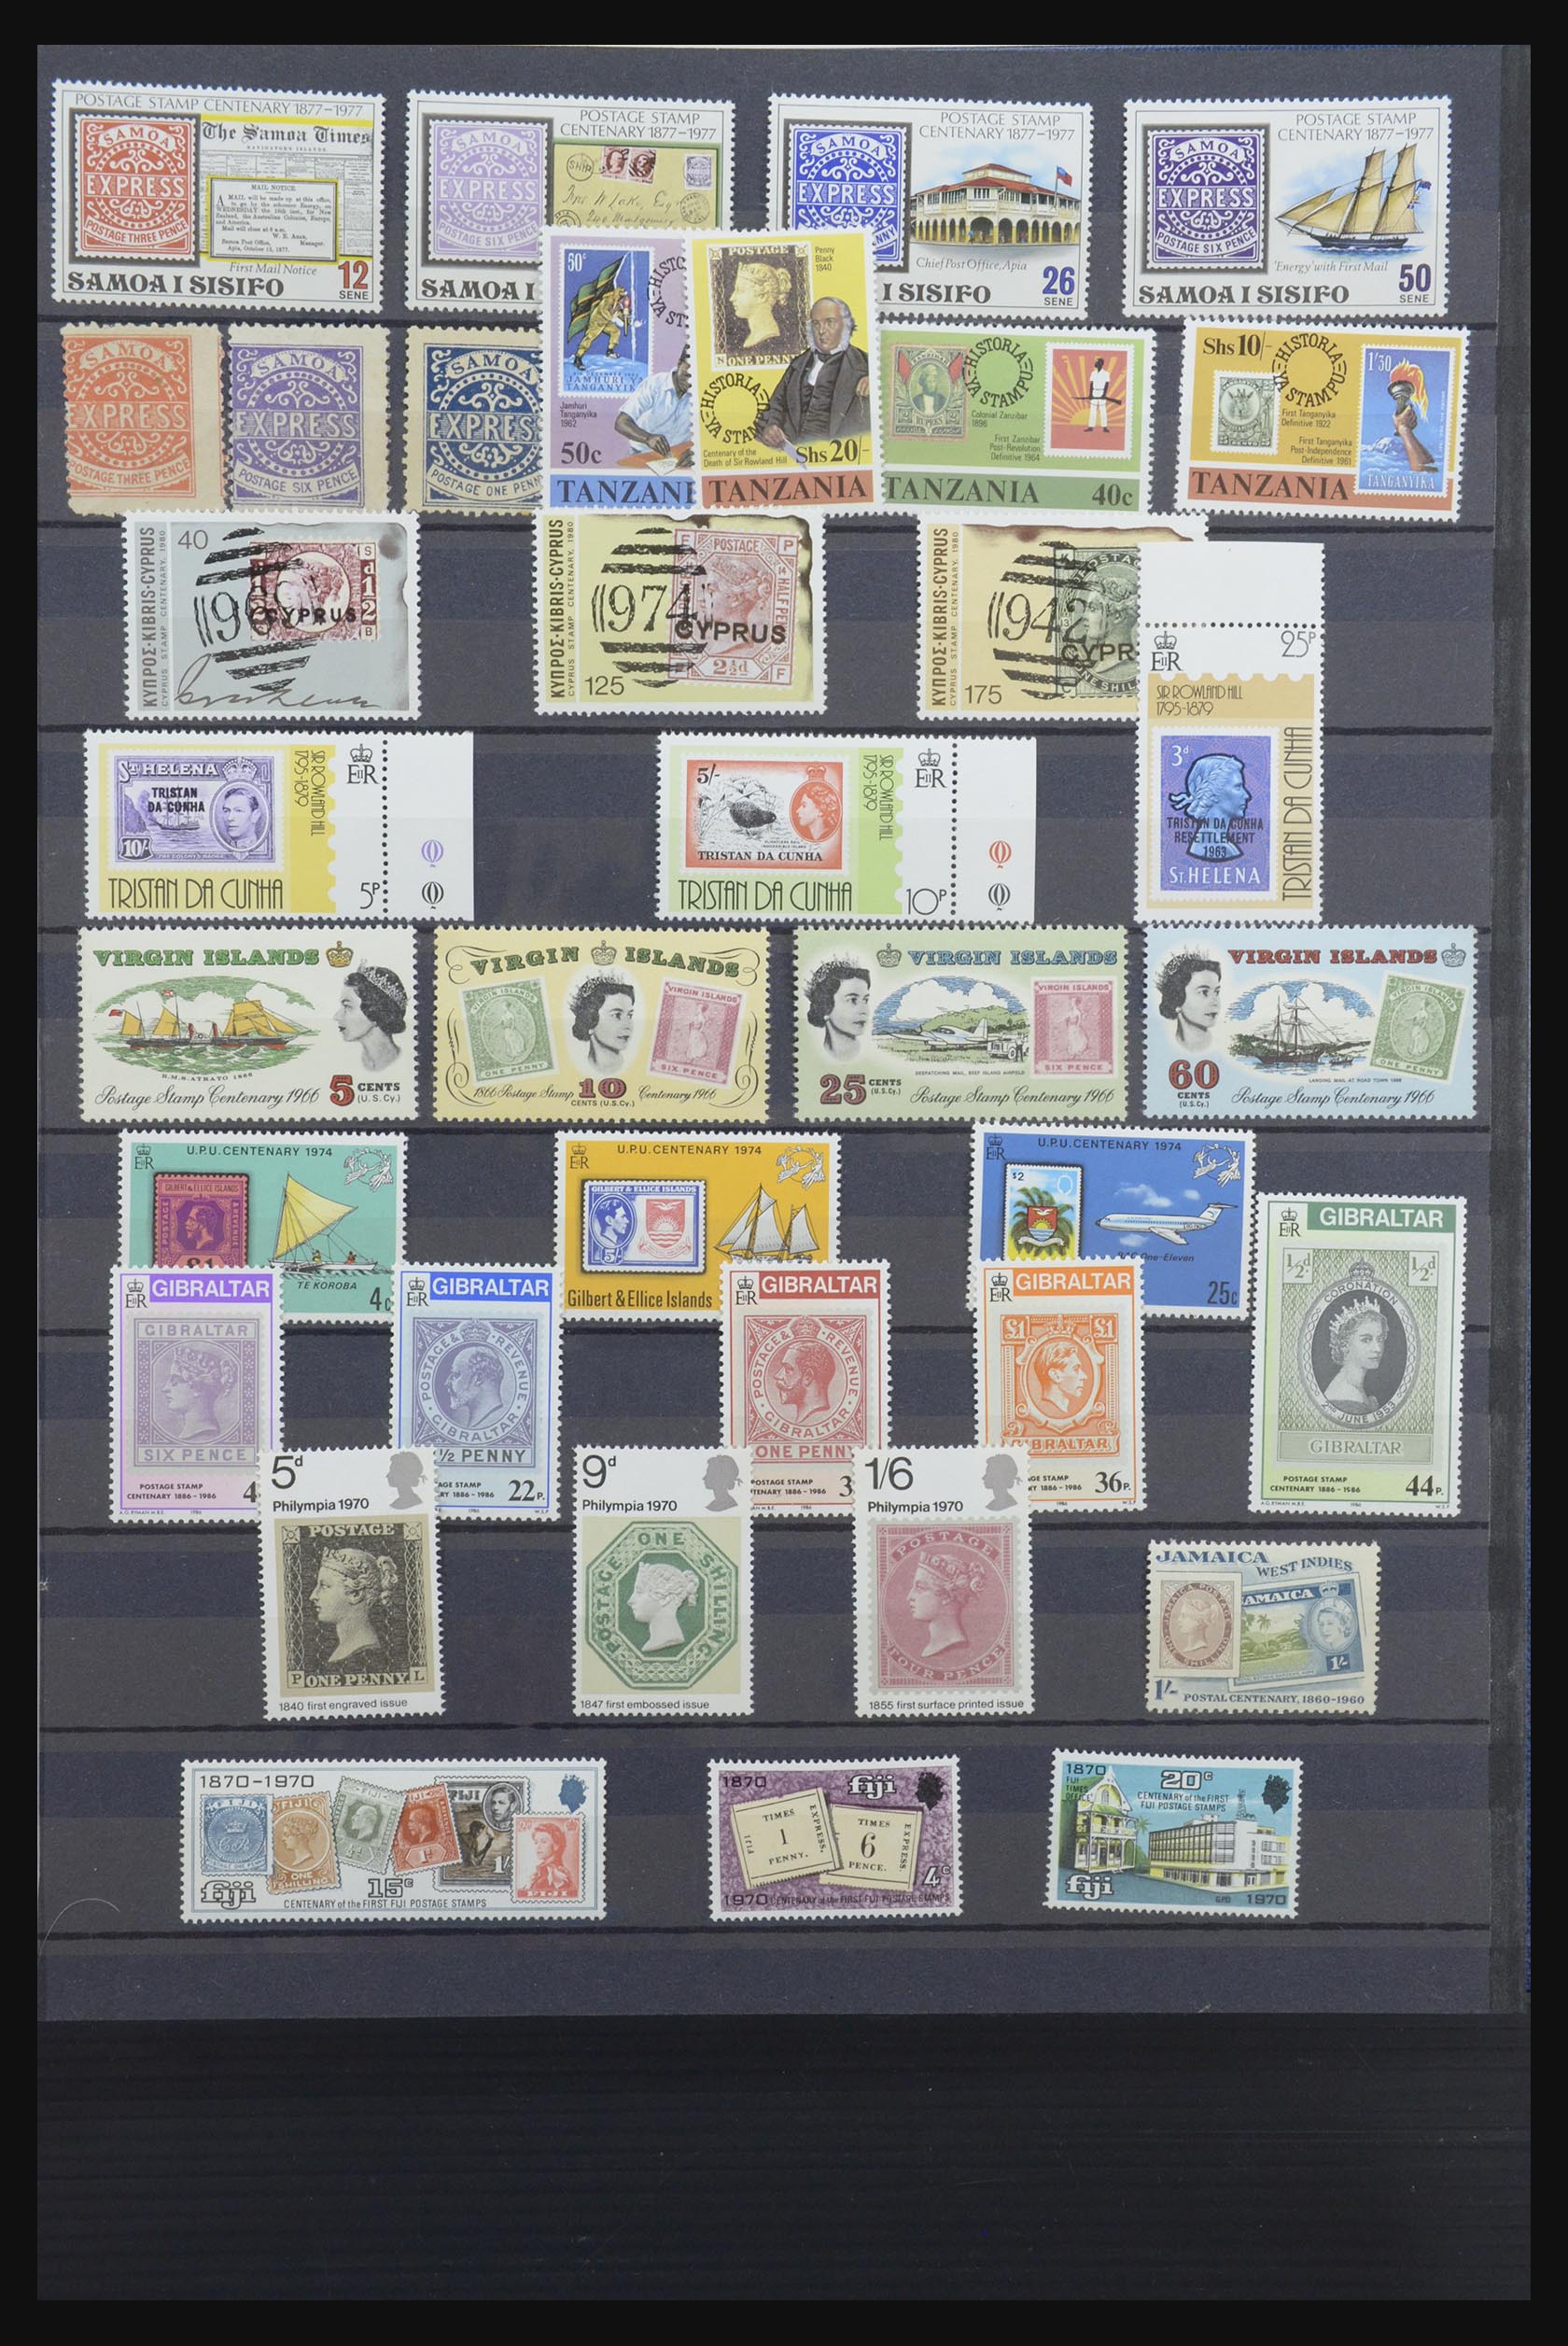 31652 063 - 31652 Motief: postzegel op postzegel 1940-1993.